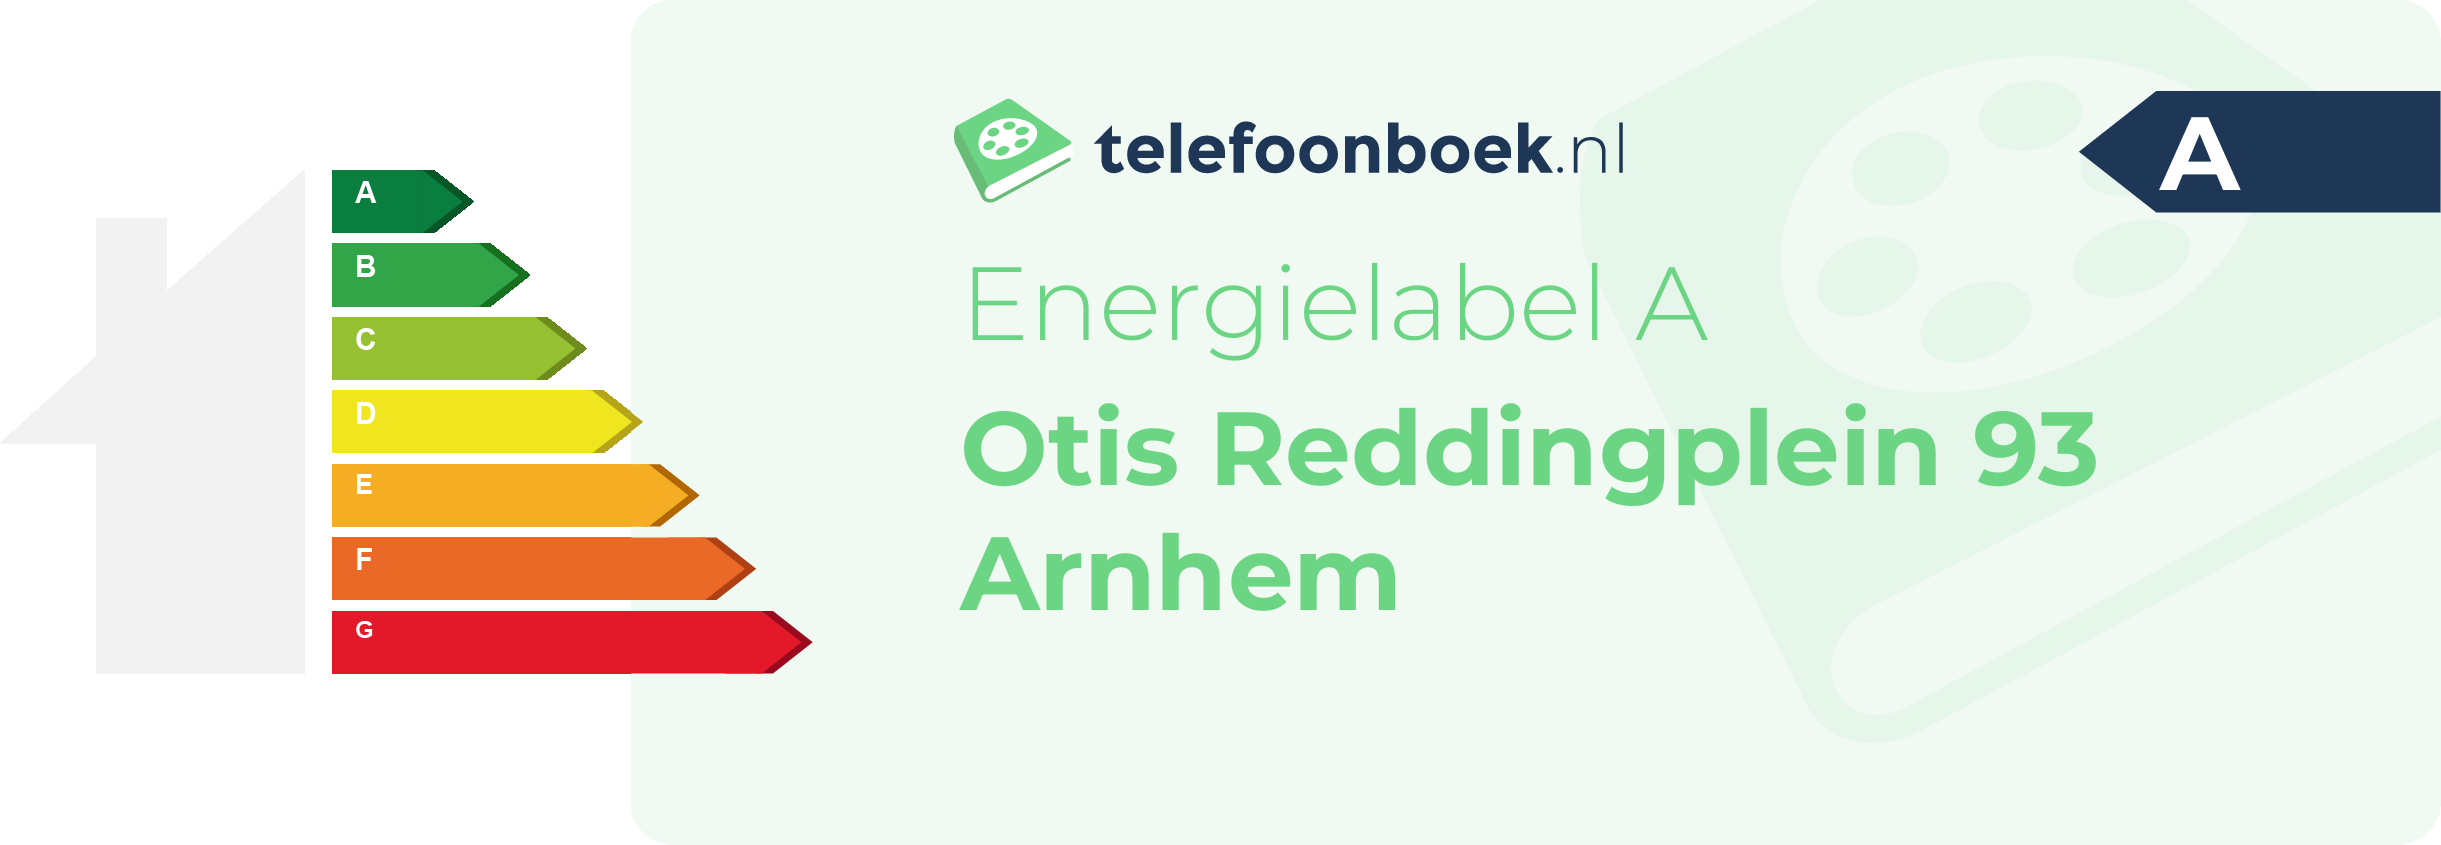 Energielabel Otis Reddingplein 93 Arnhem